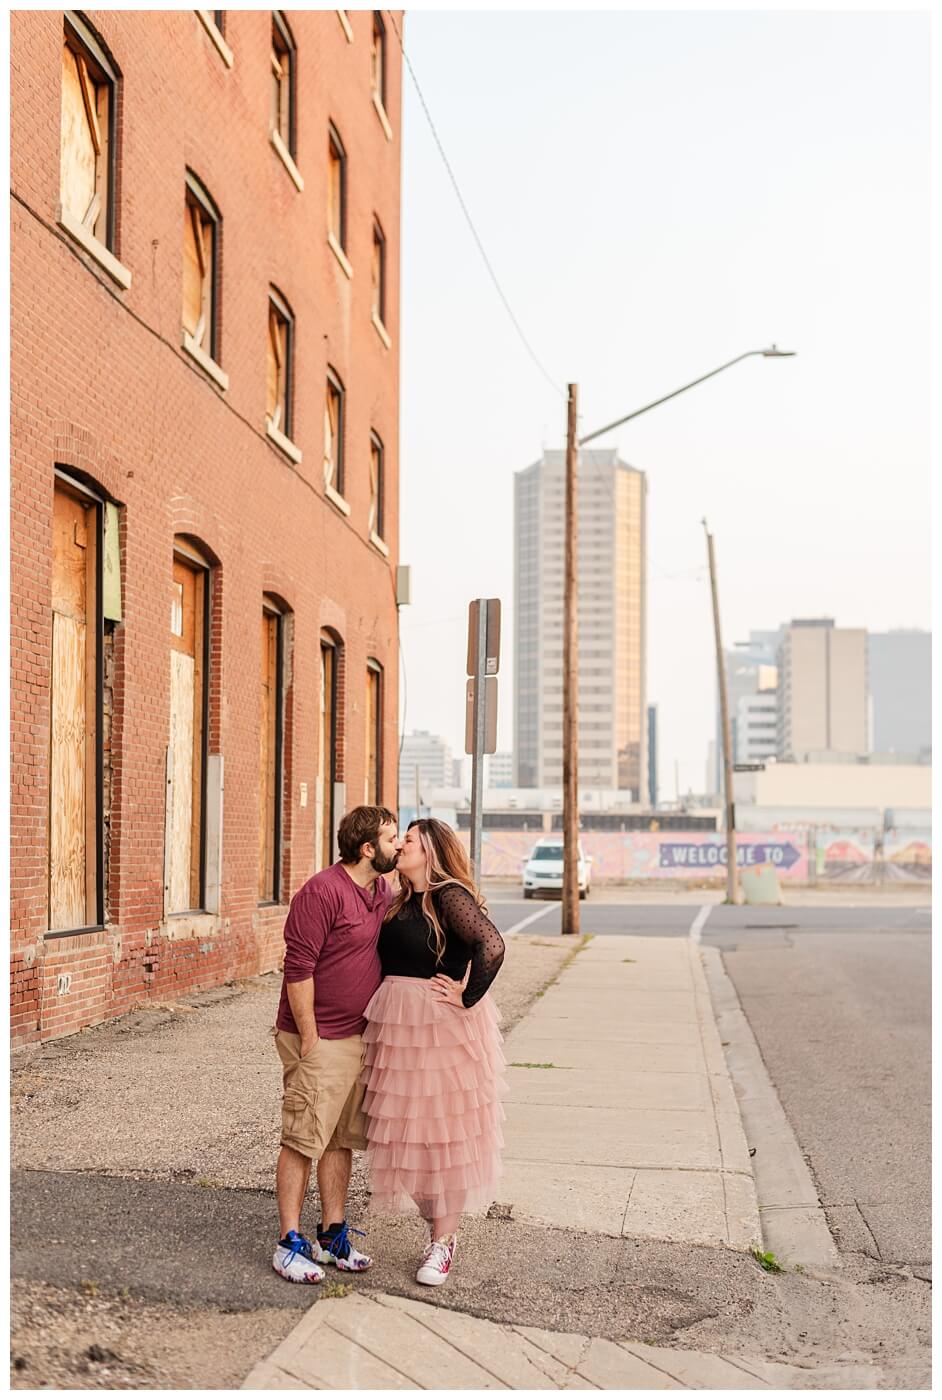 TJ & Danielle - Regina Warehouse District - 12 - Couple kisses in alley